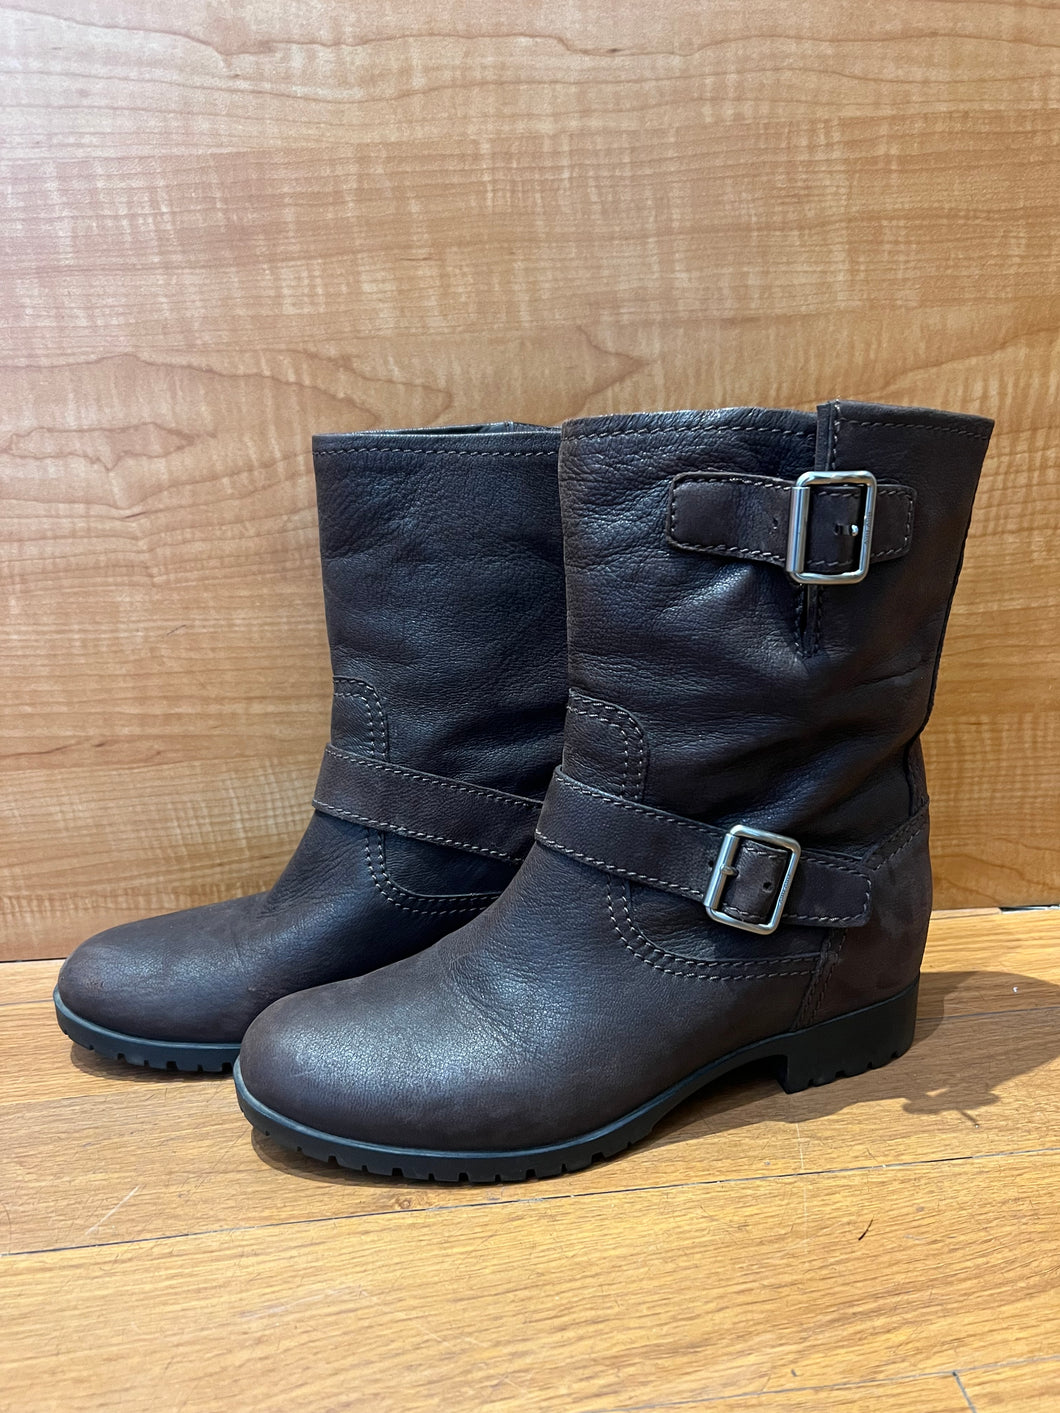 Miu Miu Brown Leather Boots Size 9